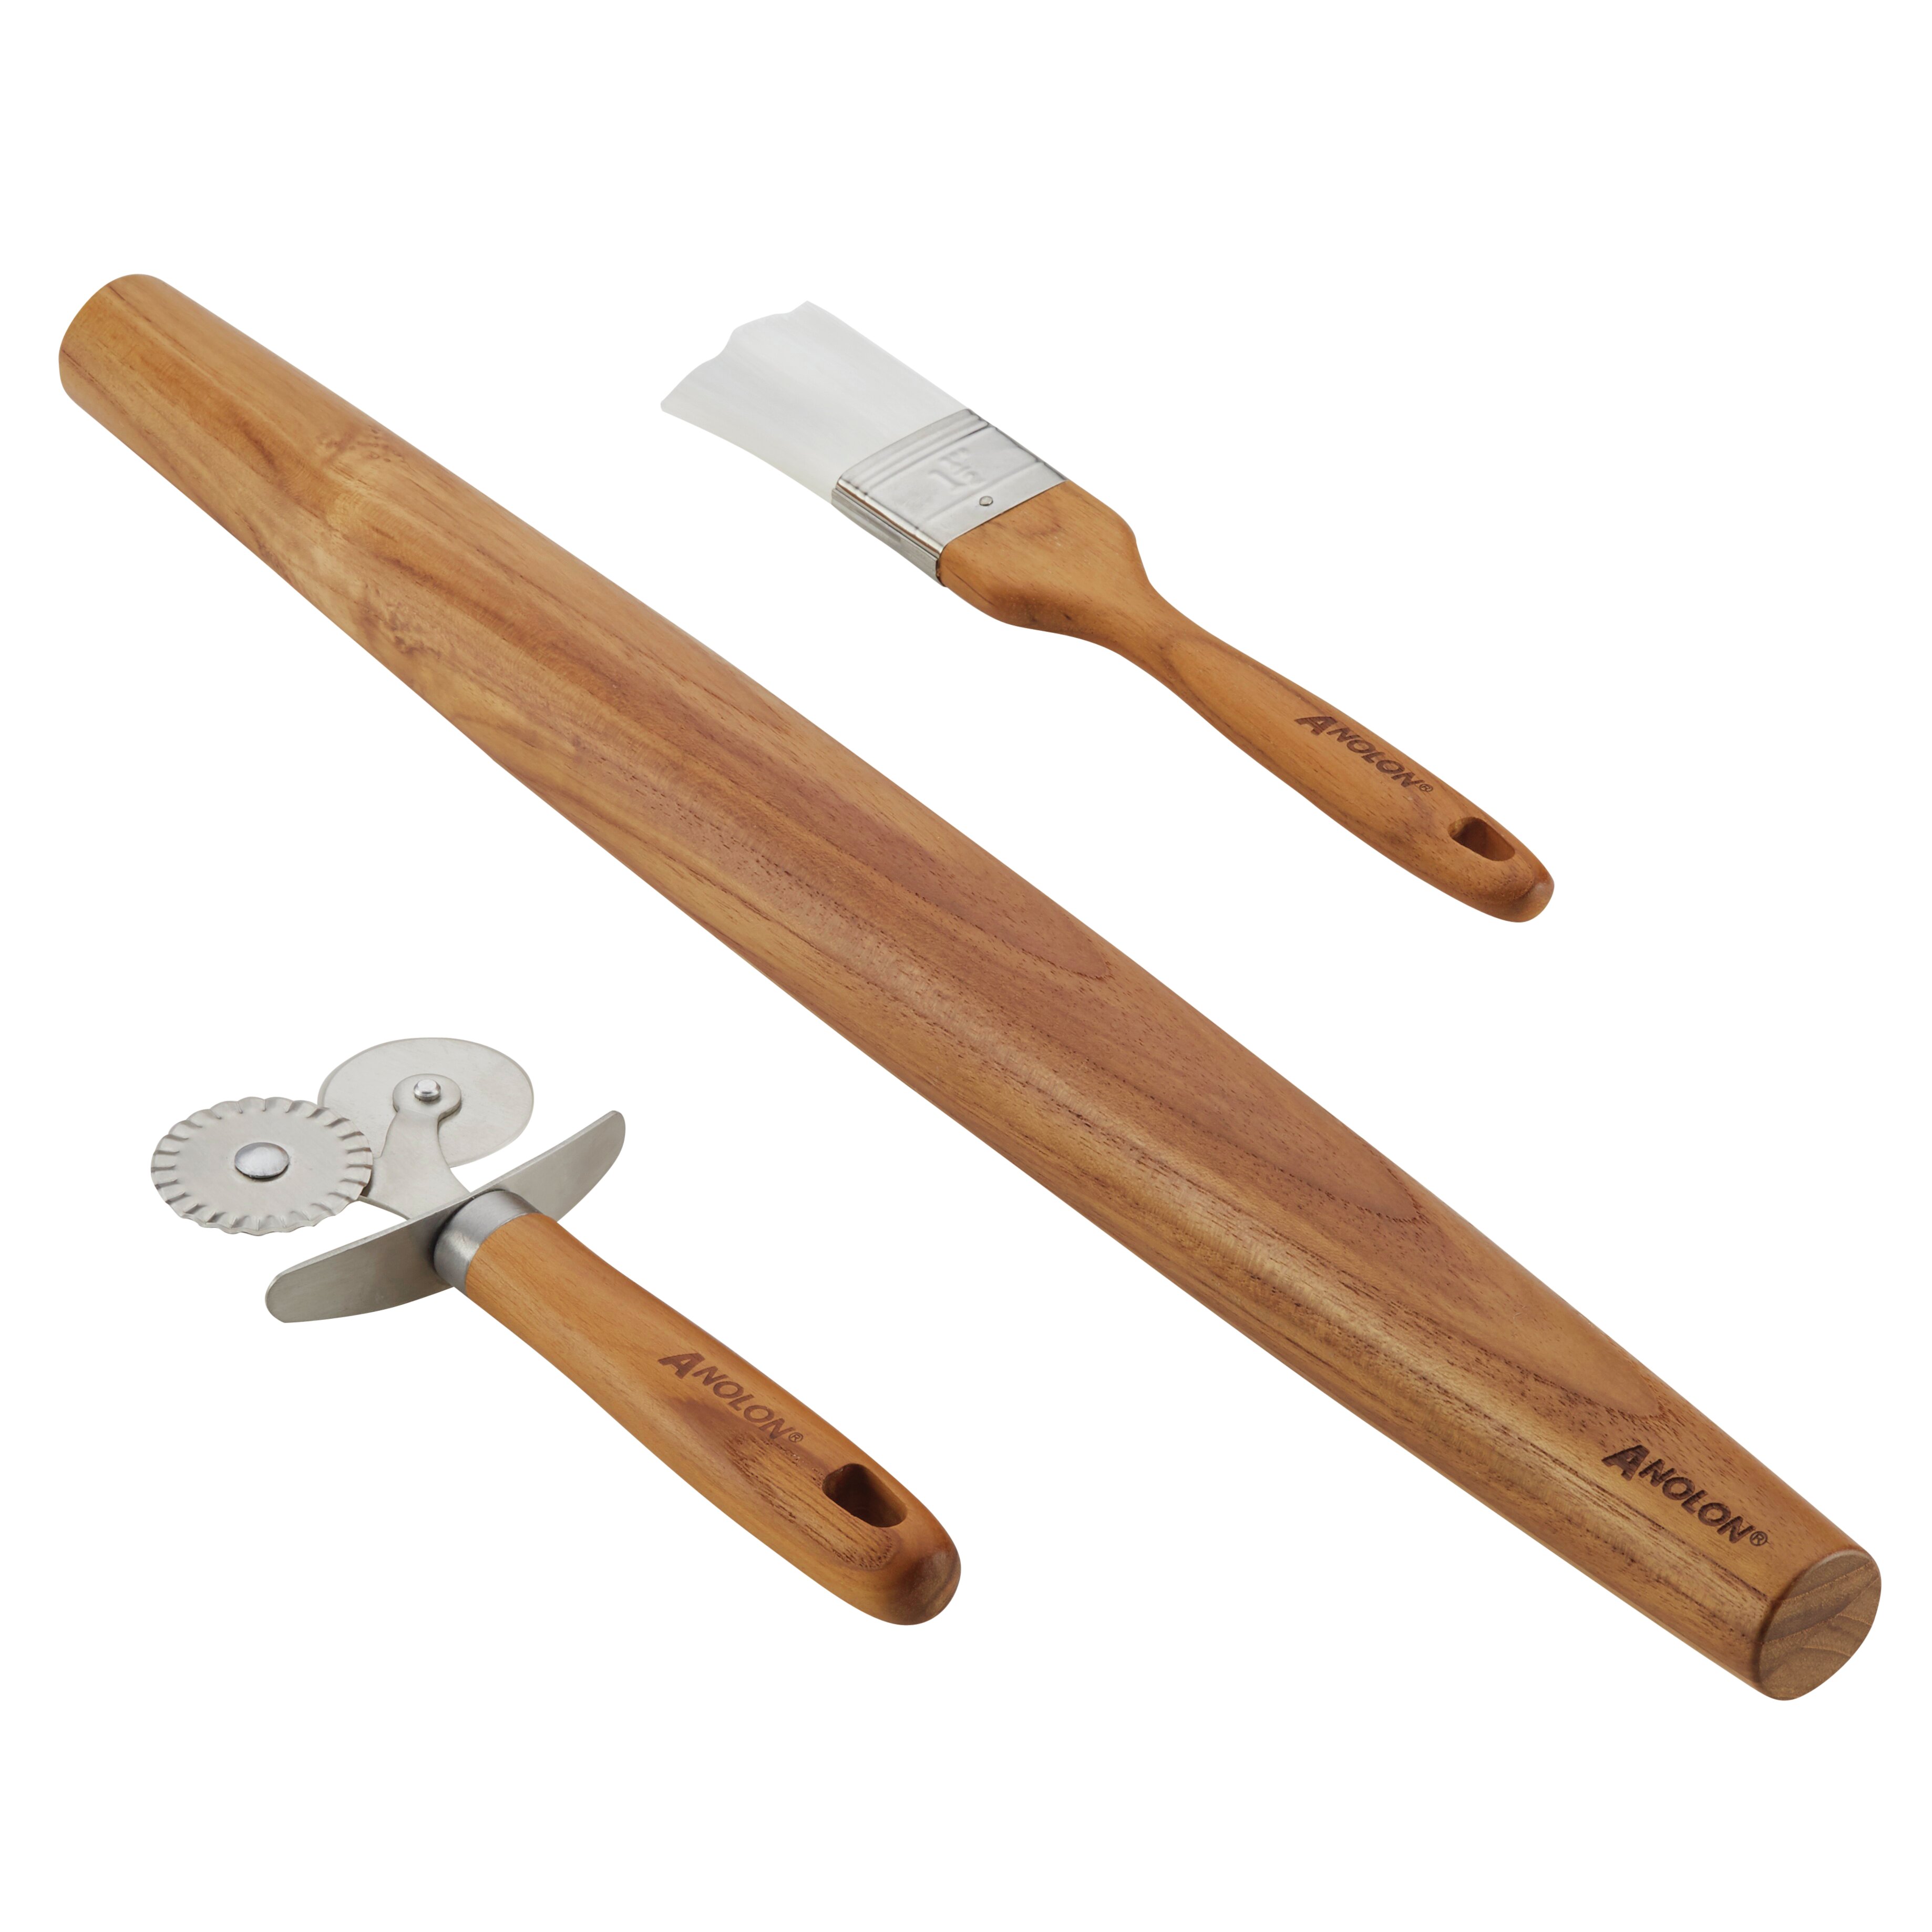 Anolon Tools and Gadgets SureGrip Nonstick Kitchen Utensil Set, 10